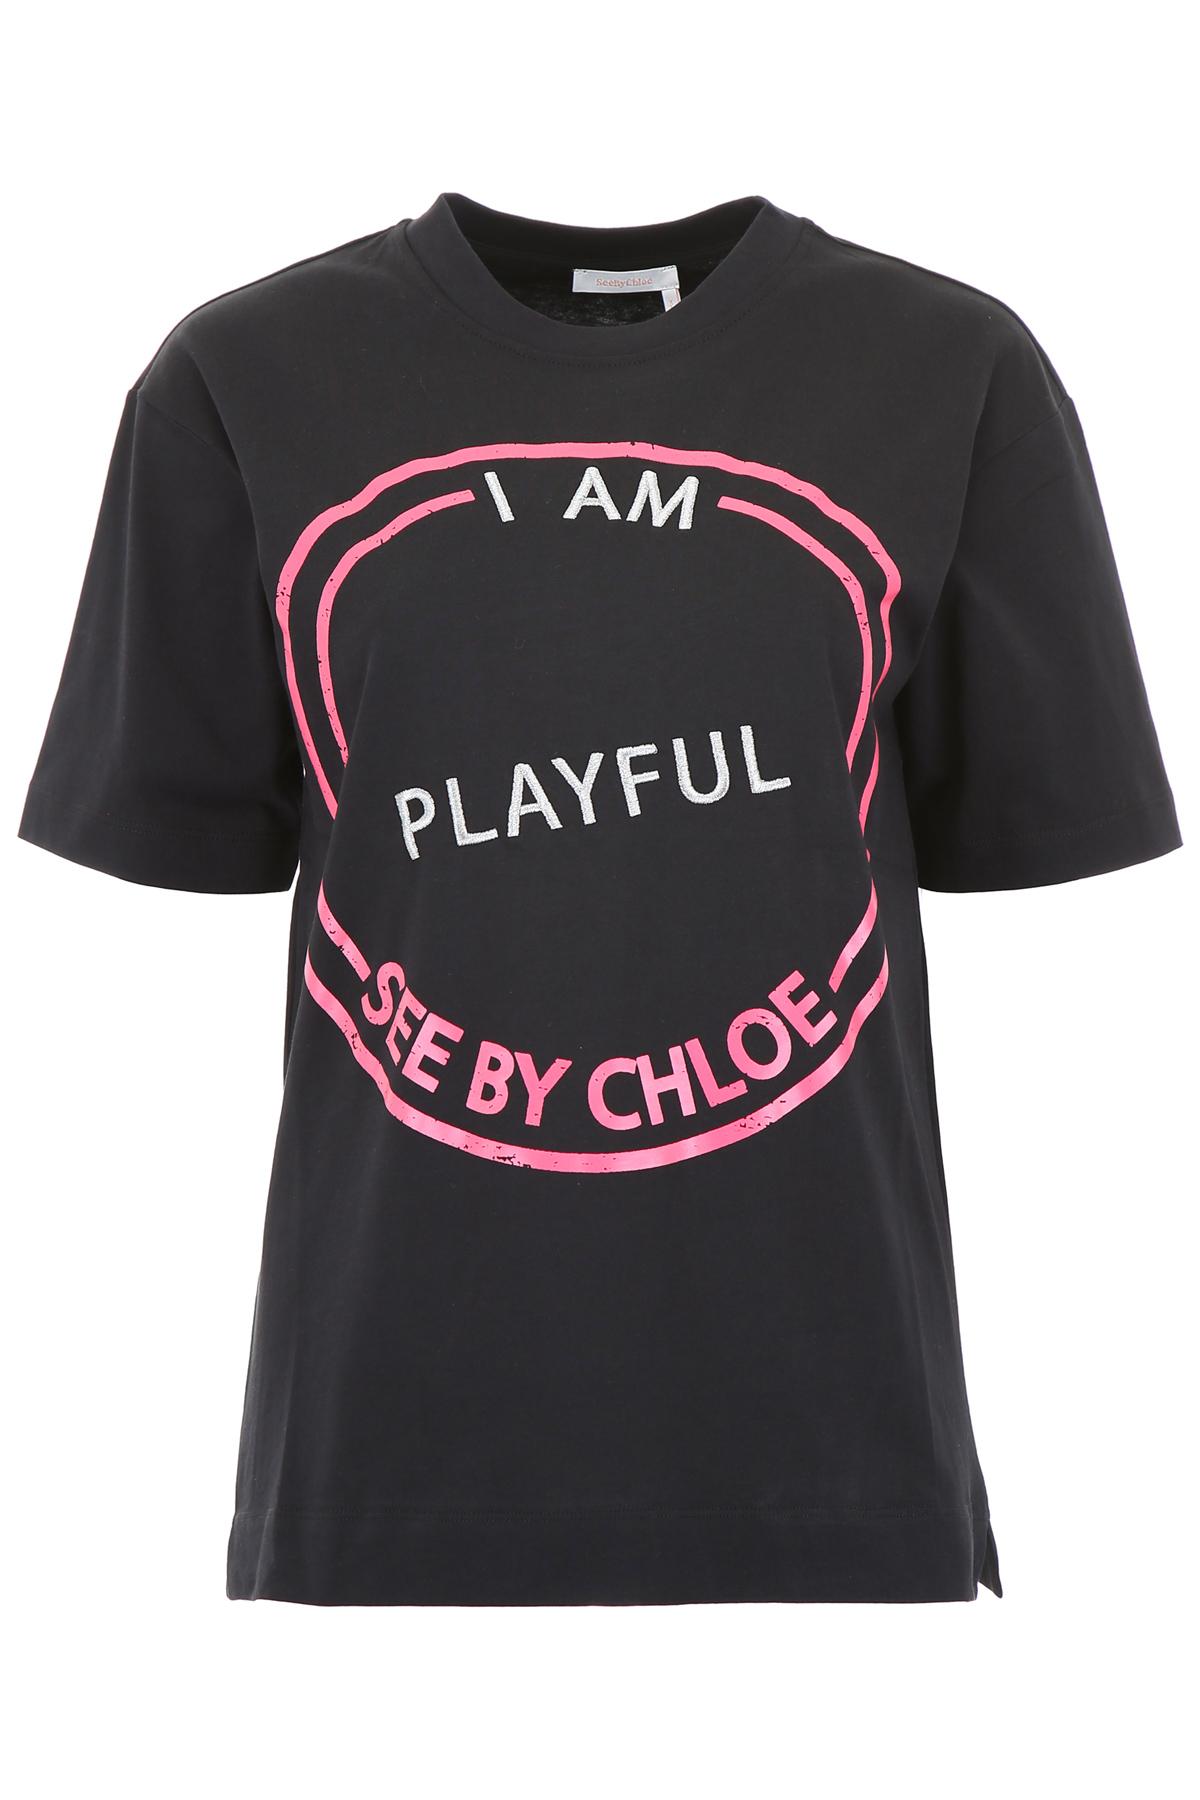 See By Chloé I Am Cheeky T-shirt in Black Beige Orange (Black) - Save ...